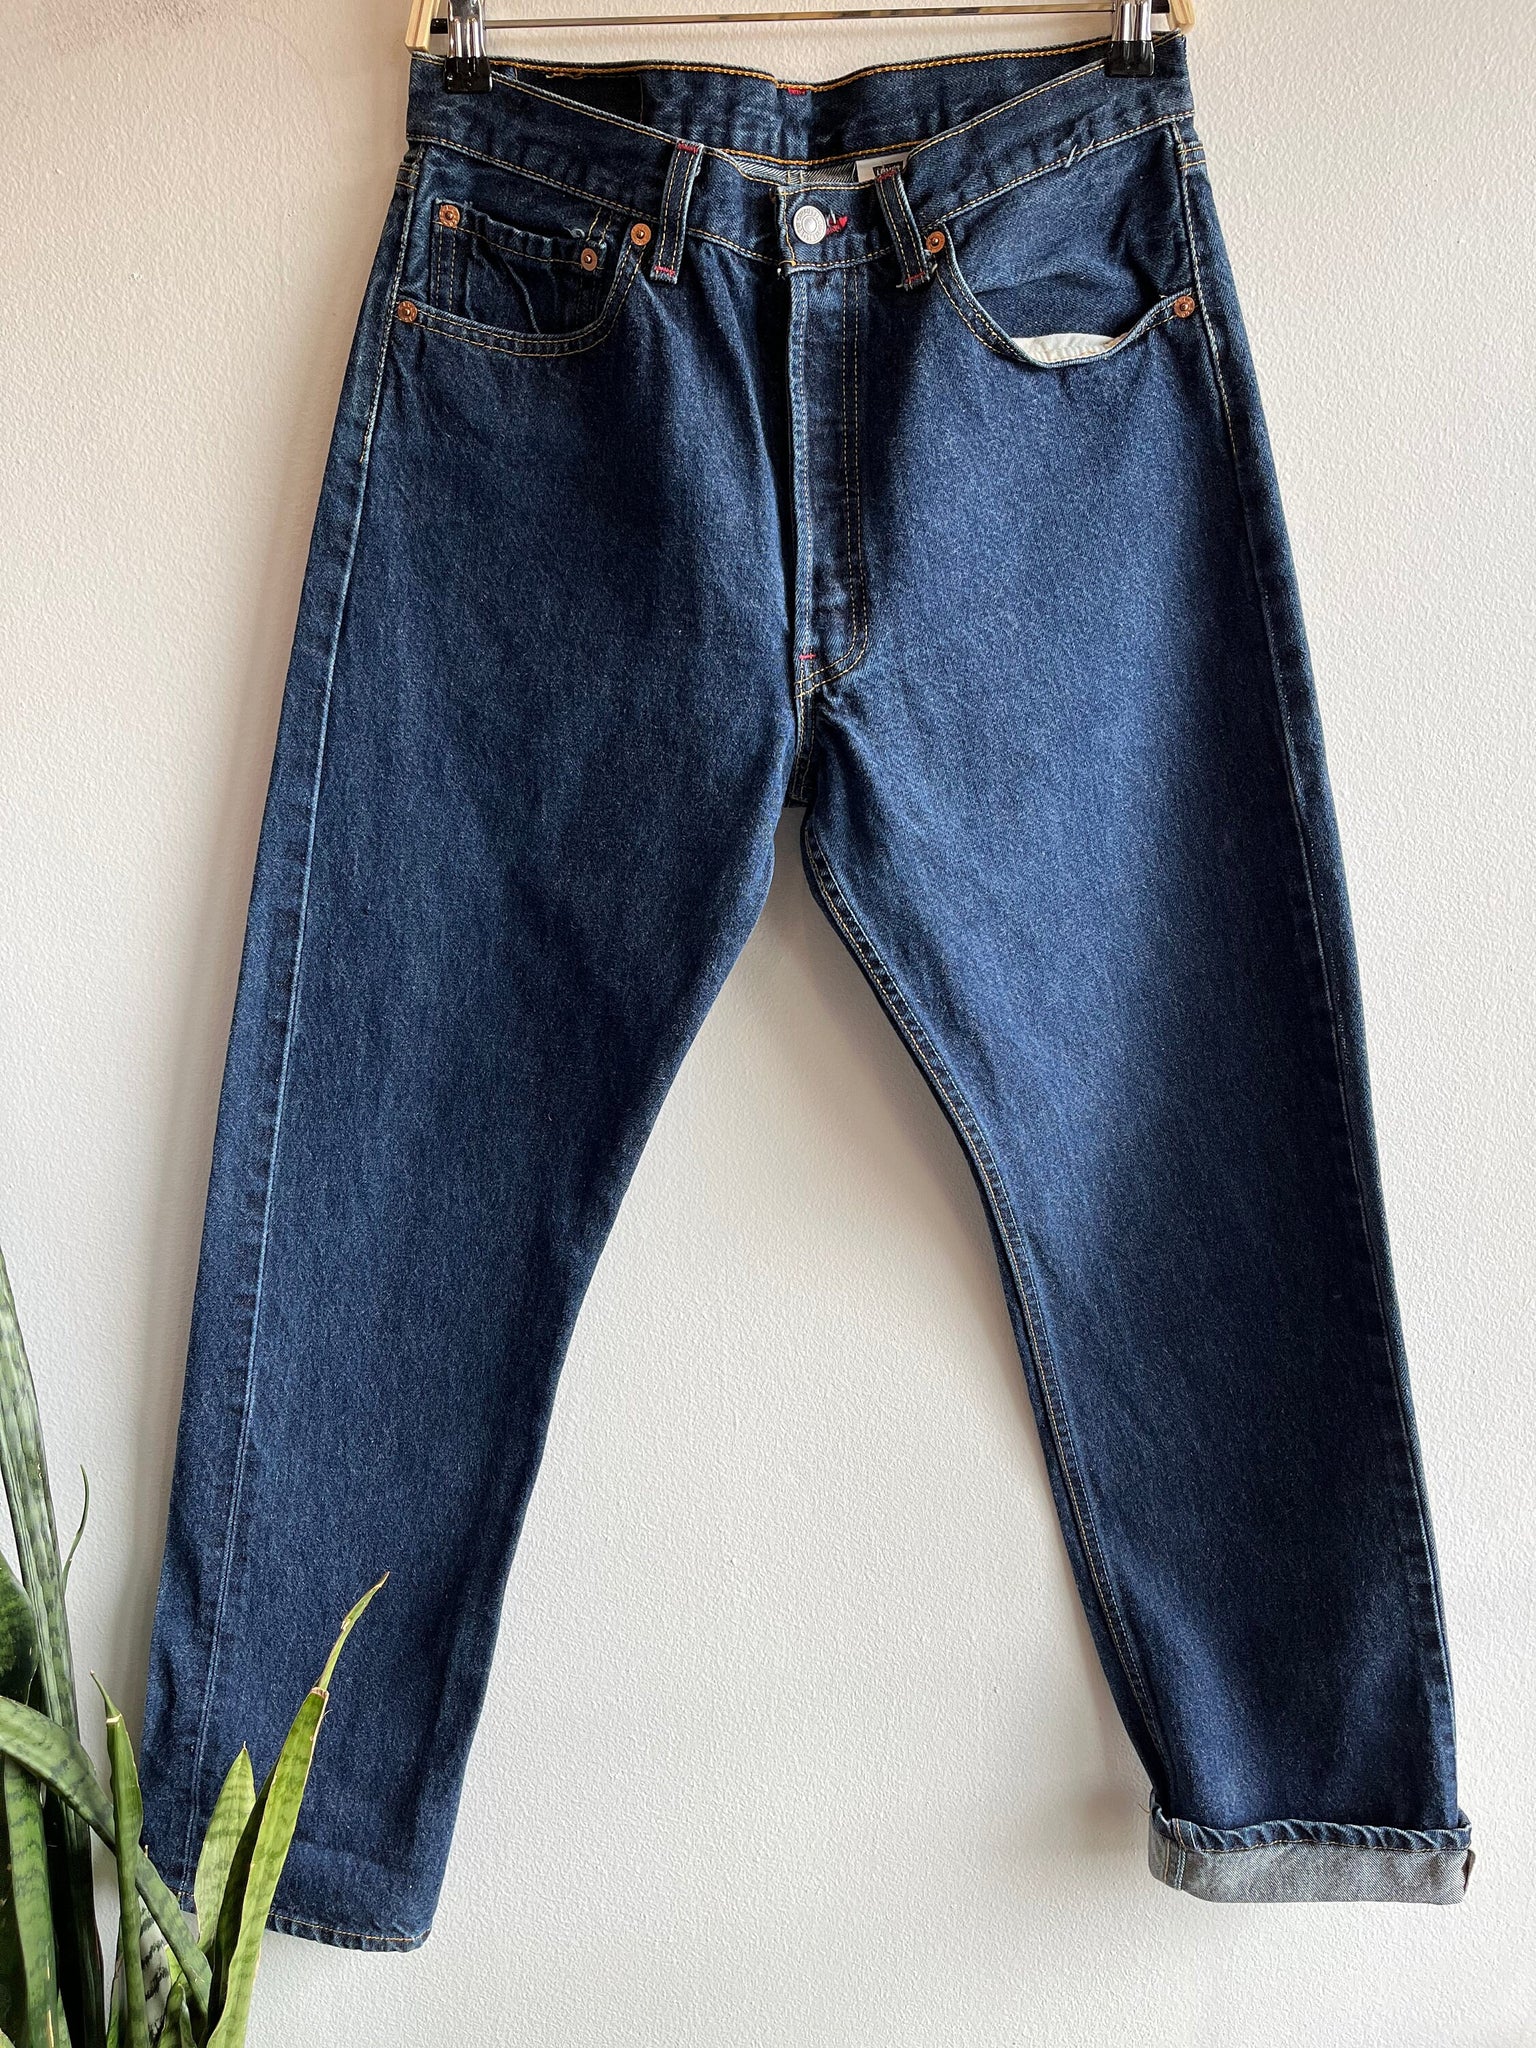 Vintage 1990’s levi’s 501 selvedge denim jeans